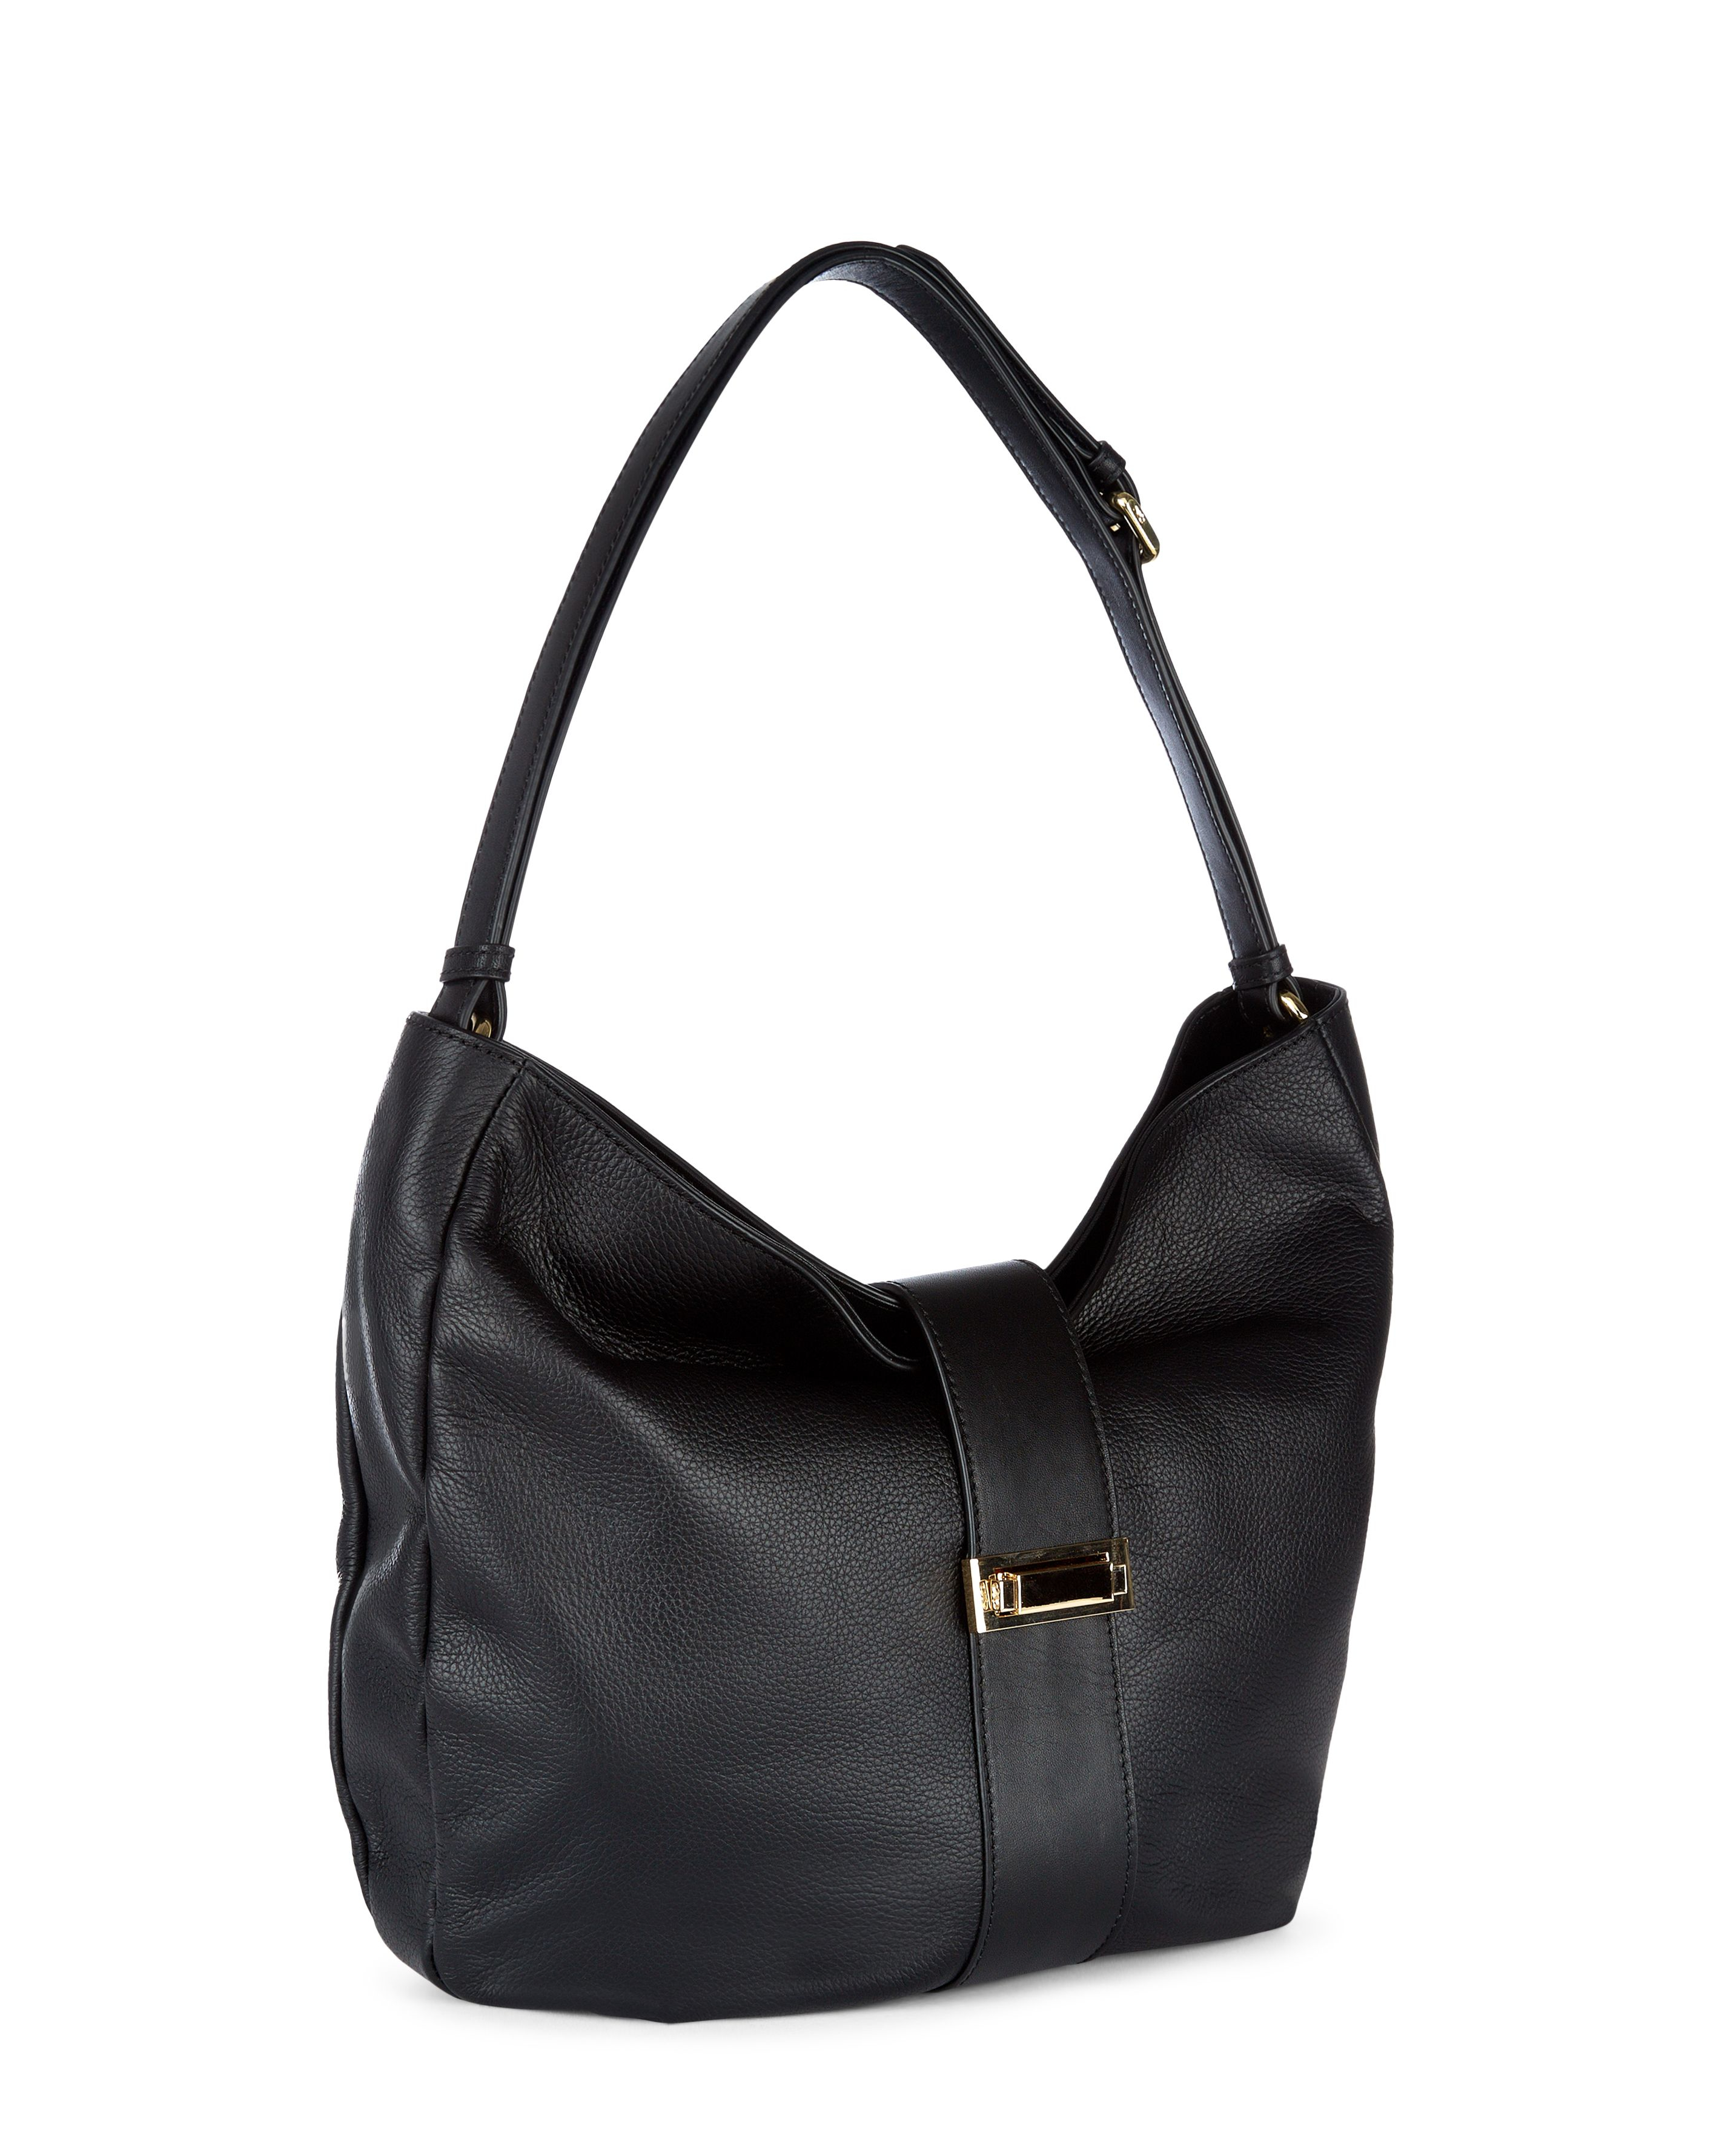 Jaeger Handbags. Angelkiss Women Top Handle Handbags Purse Shoulder Bag ...